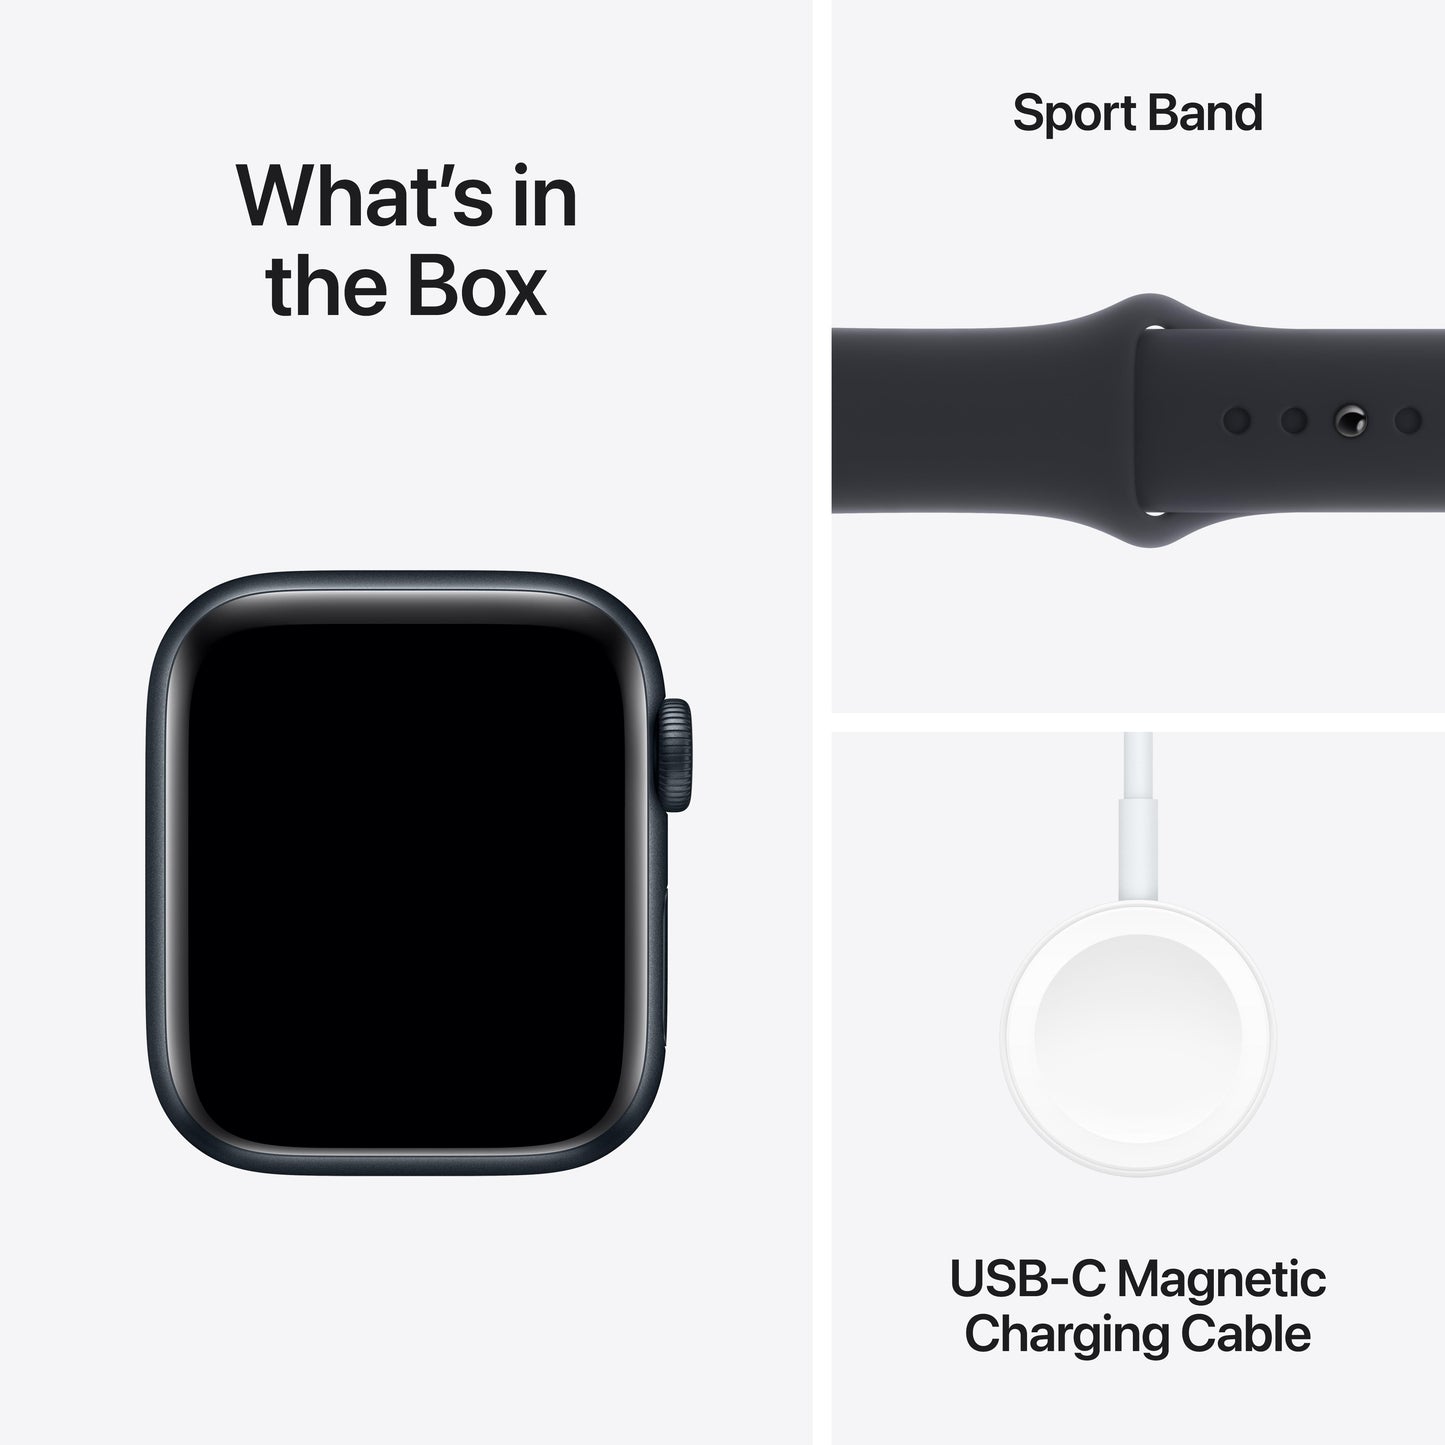 Apple Watch SE GPS + Cellular 40mm Midnight Aluminium Case with Midnight Sport Band - S/M